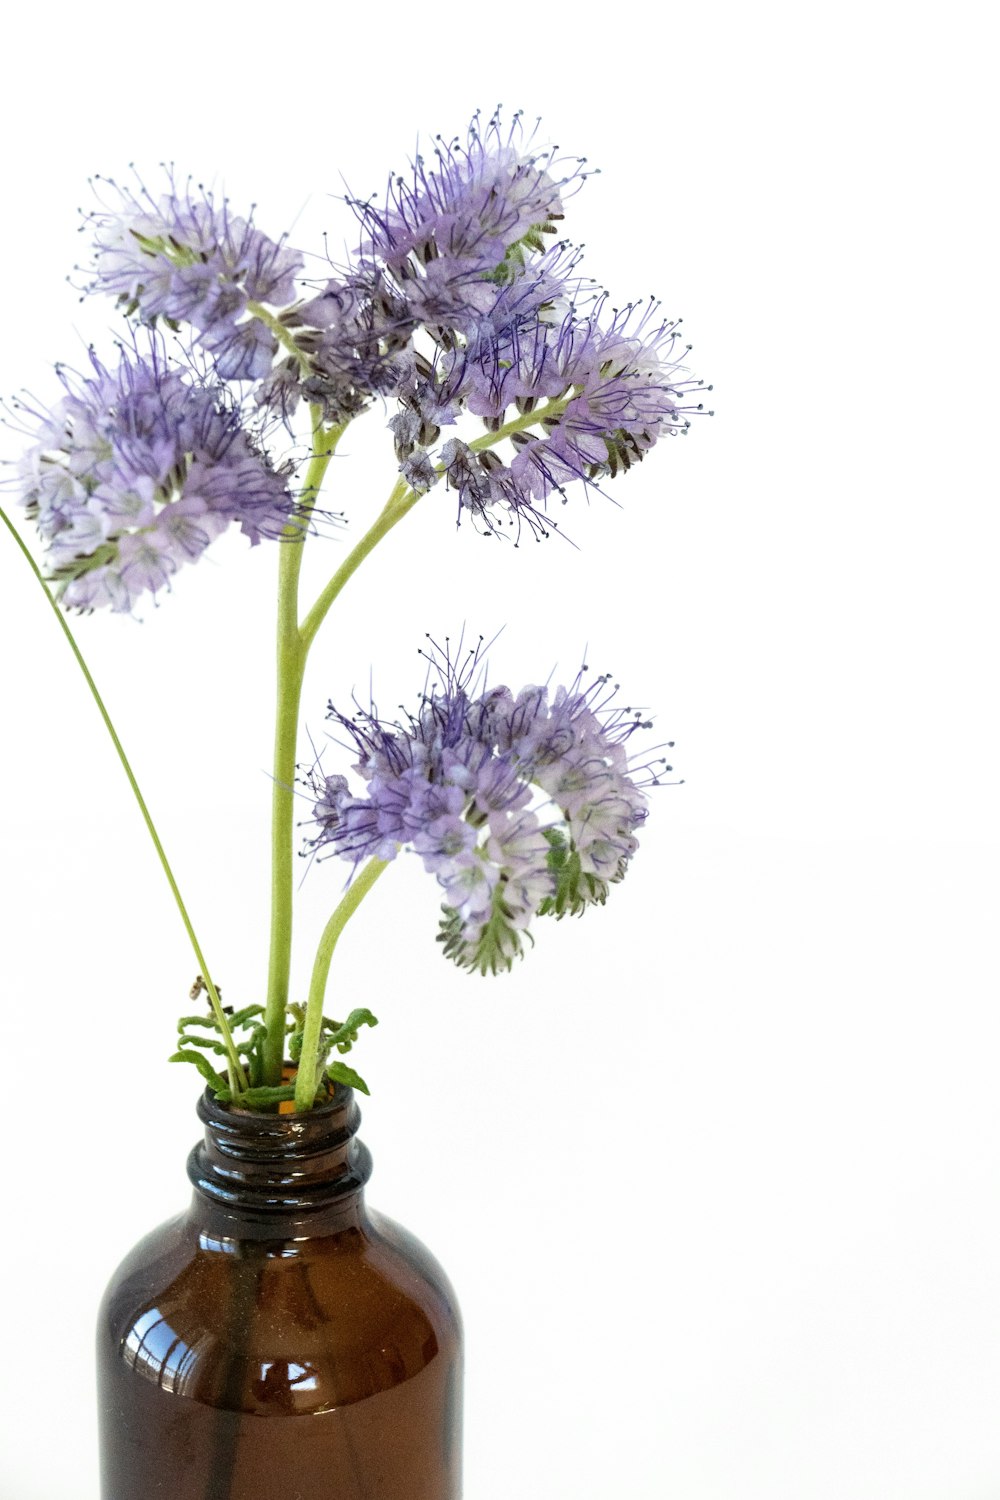 purple and white flowers on white ceramic vase